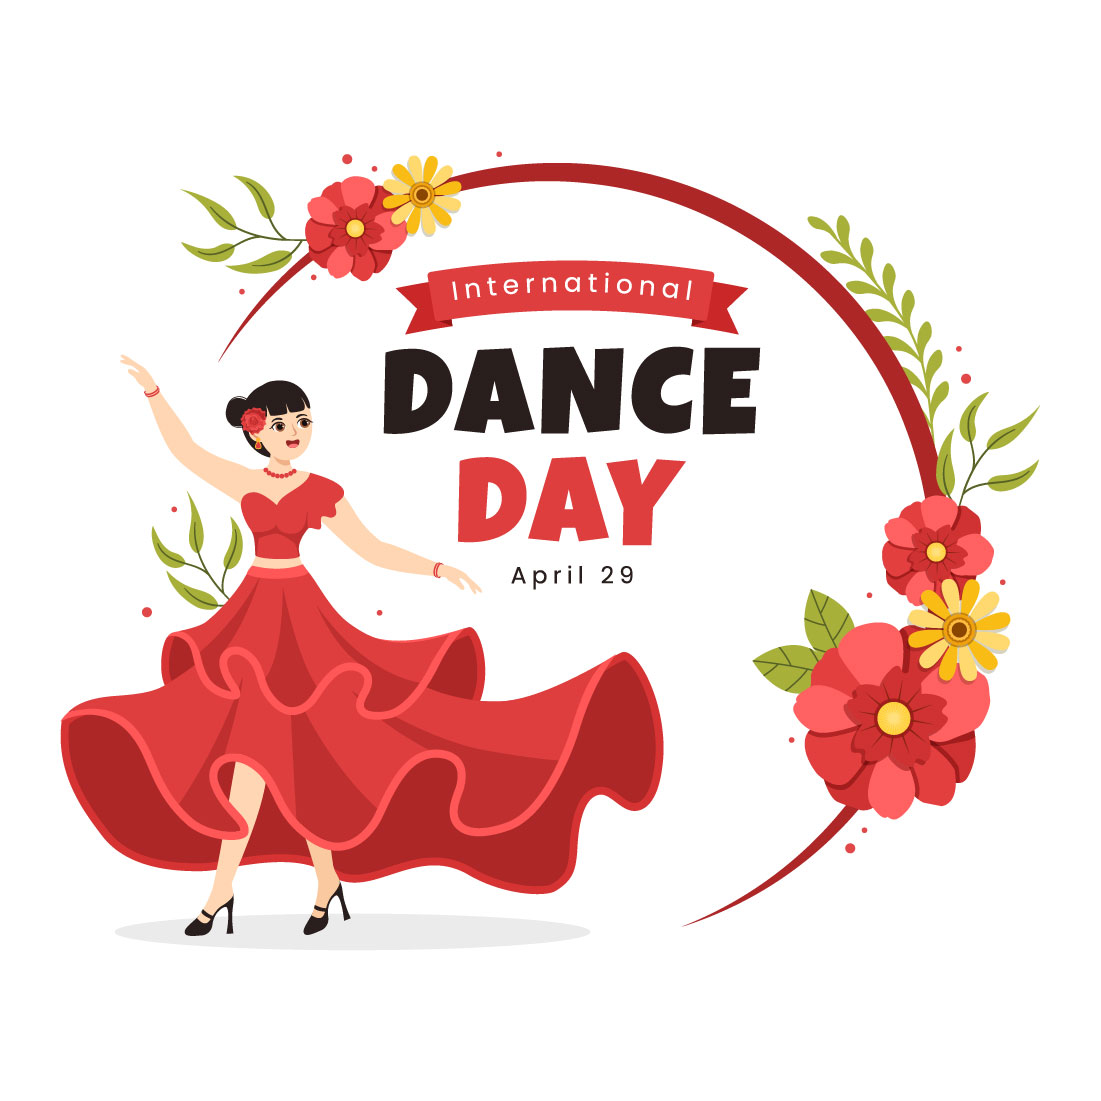 18 International Dance Day Illustration cover image.